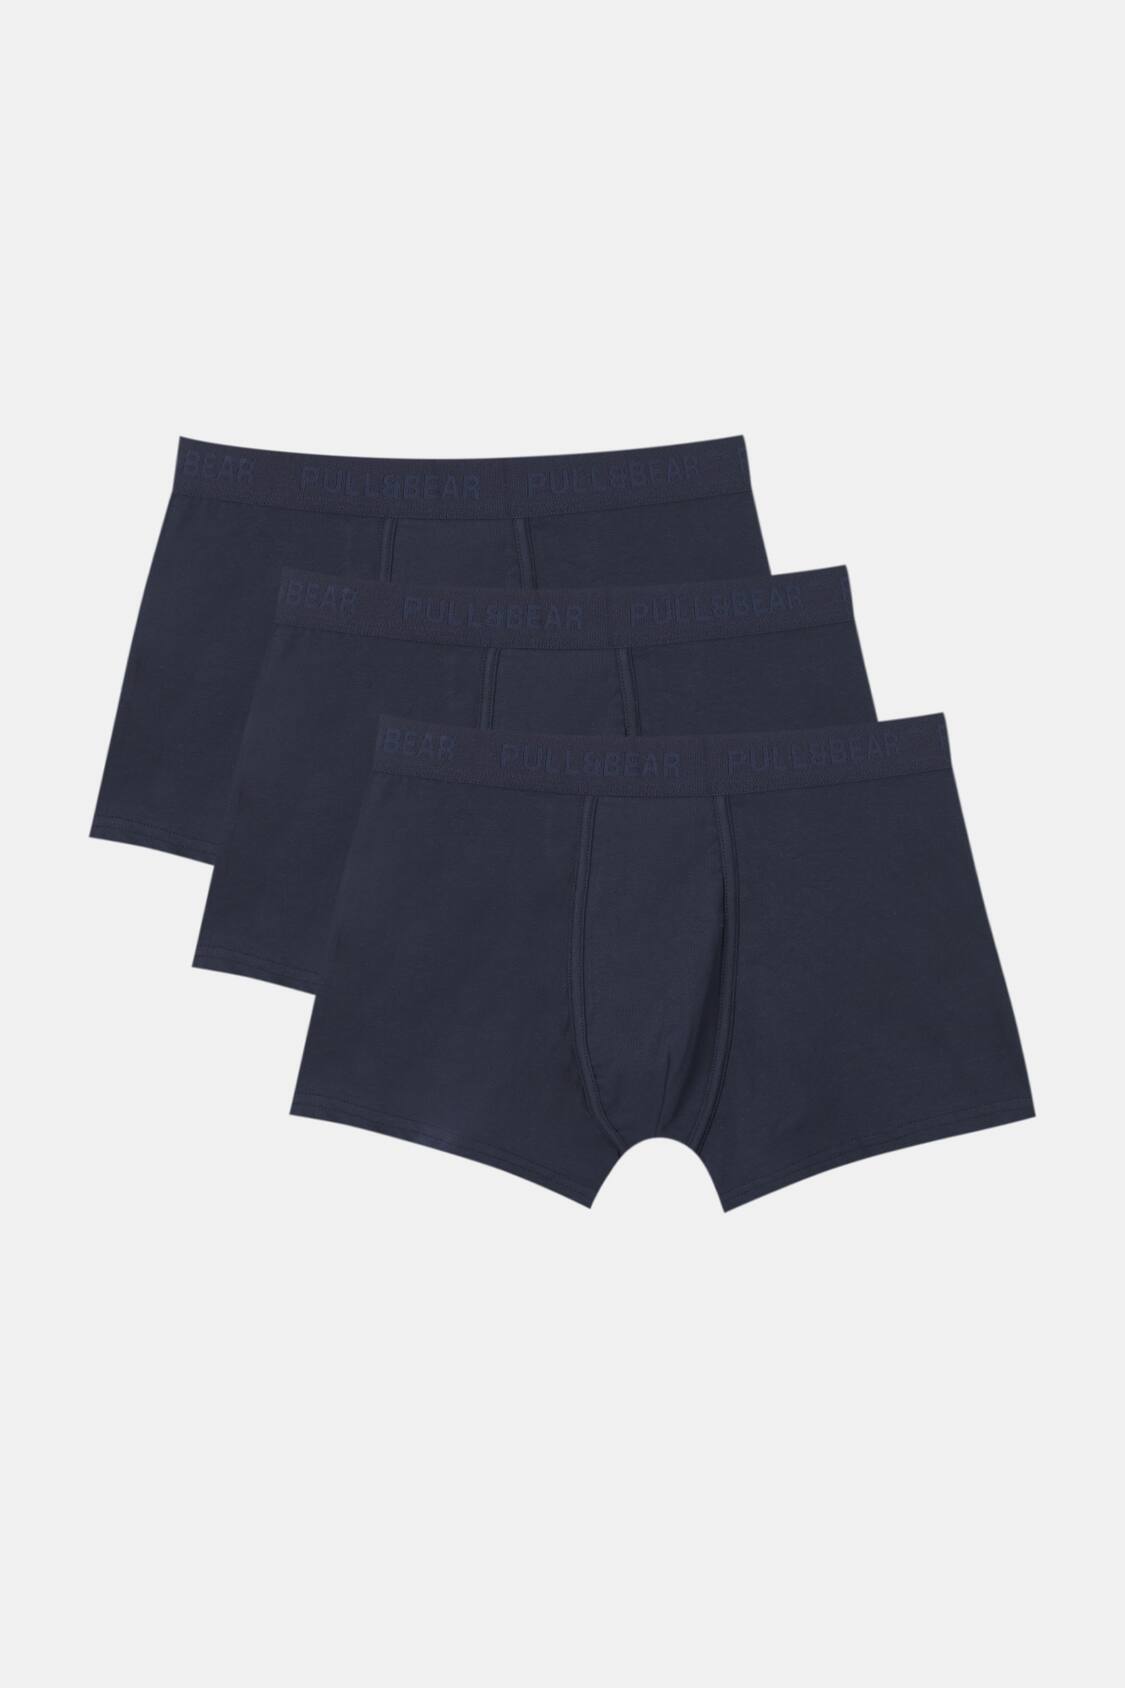 Pack of 3 pairs of dark blue boxers - PULL&BEAR